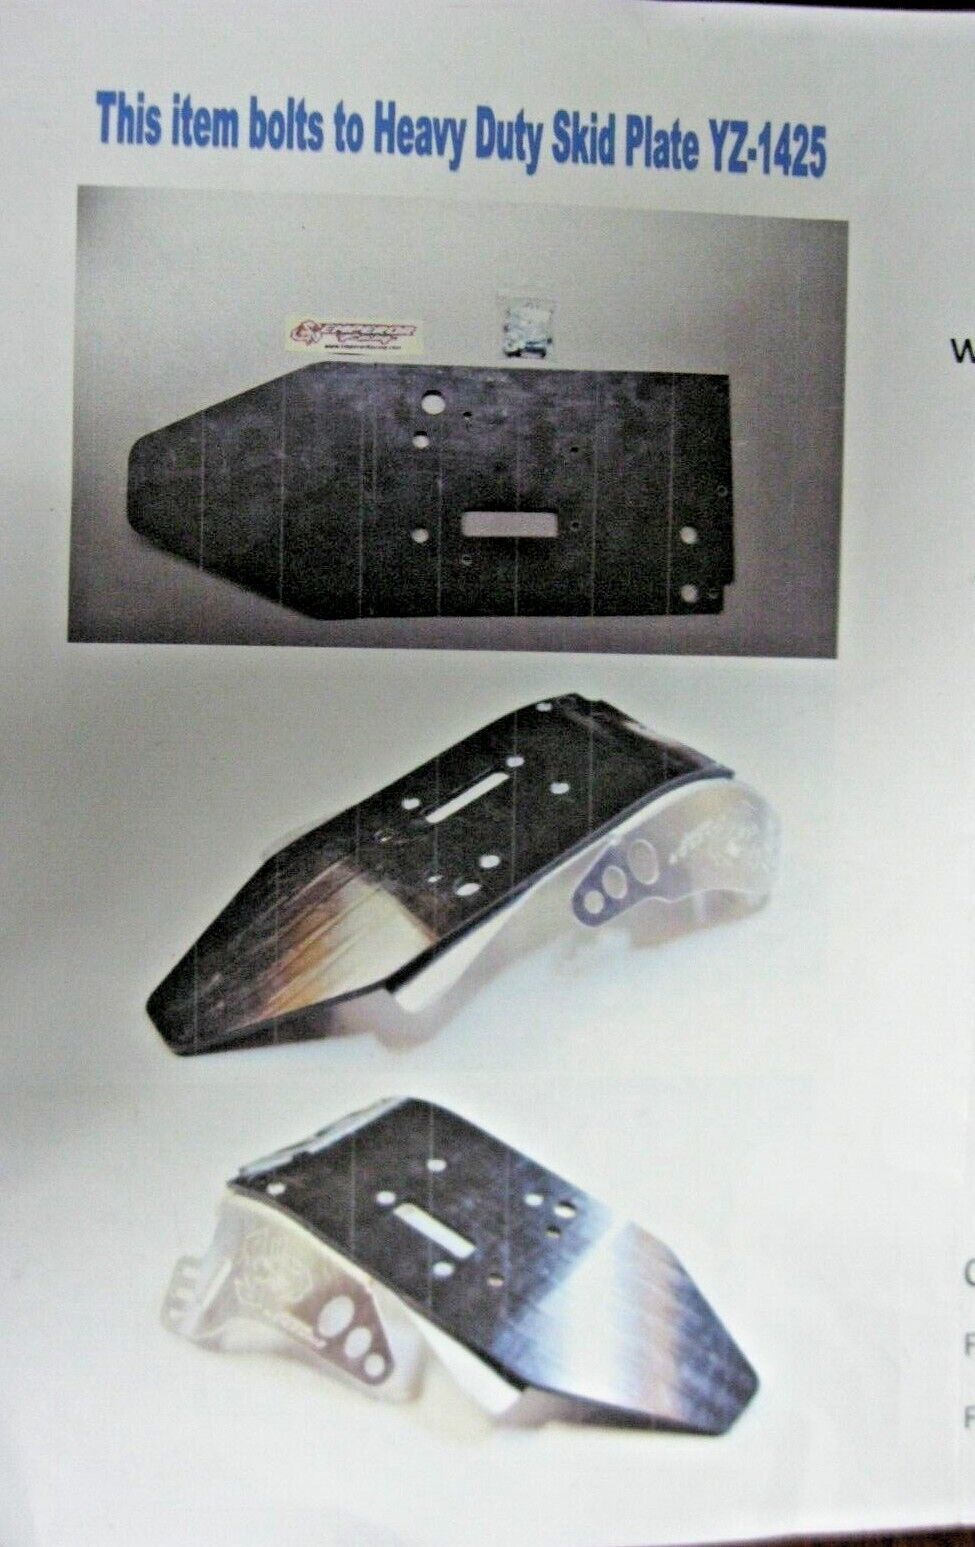 Emperor Racing Yamaha Plastic Skid Plate Liner 05-17 YZ250 16-17 YZ250X YZ-1426